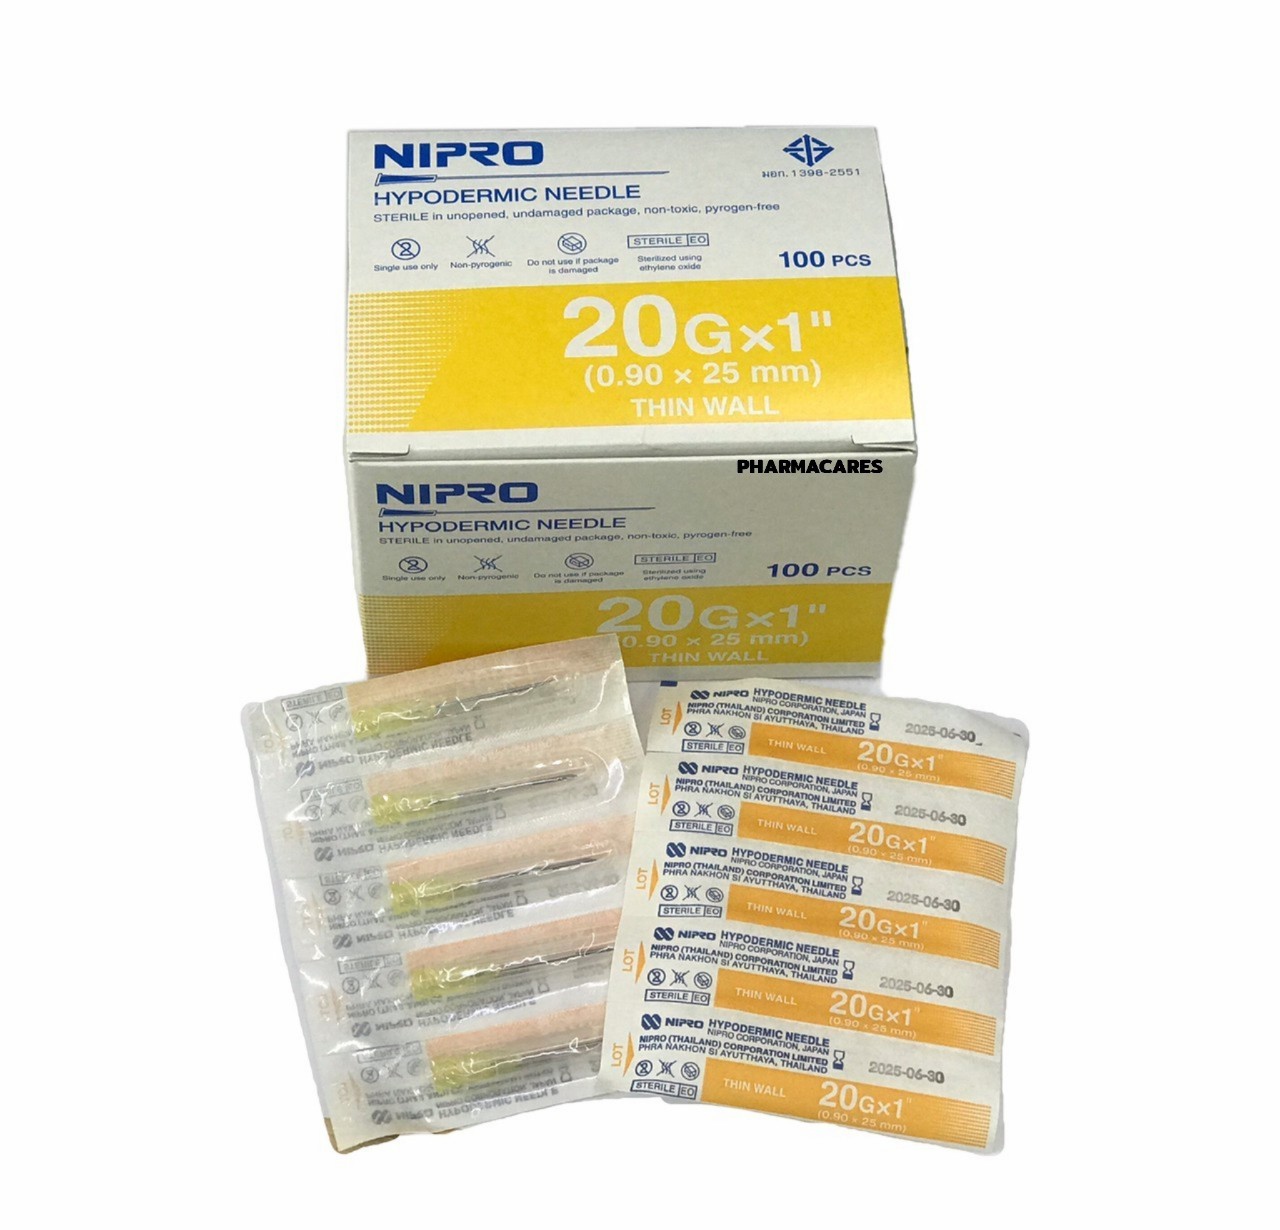 NIPRO เข็มฉีดยา ขนาด 20G x 1 นิ้ว (ซอง)